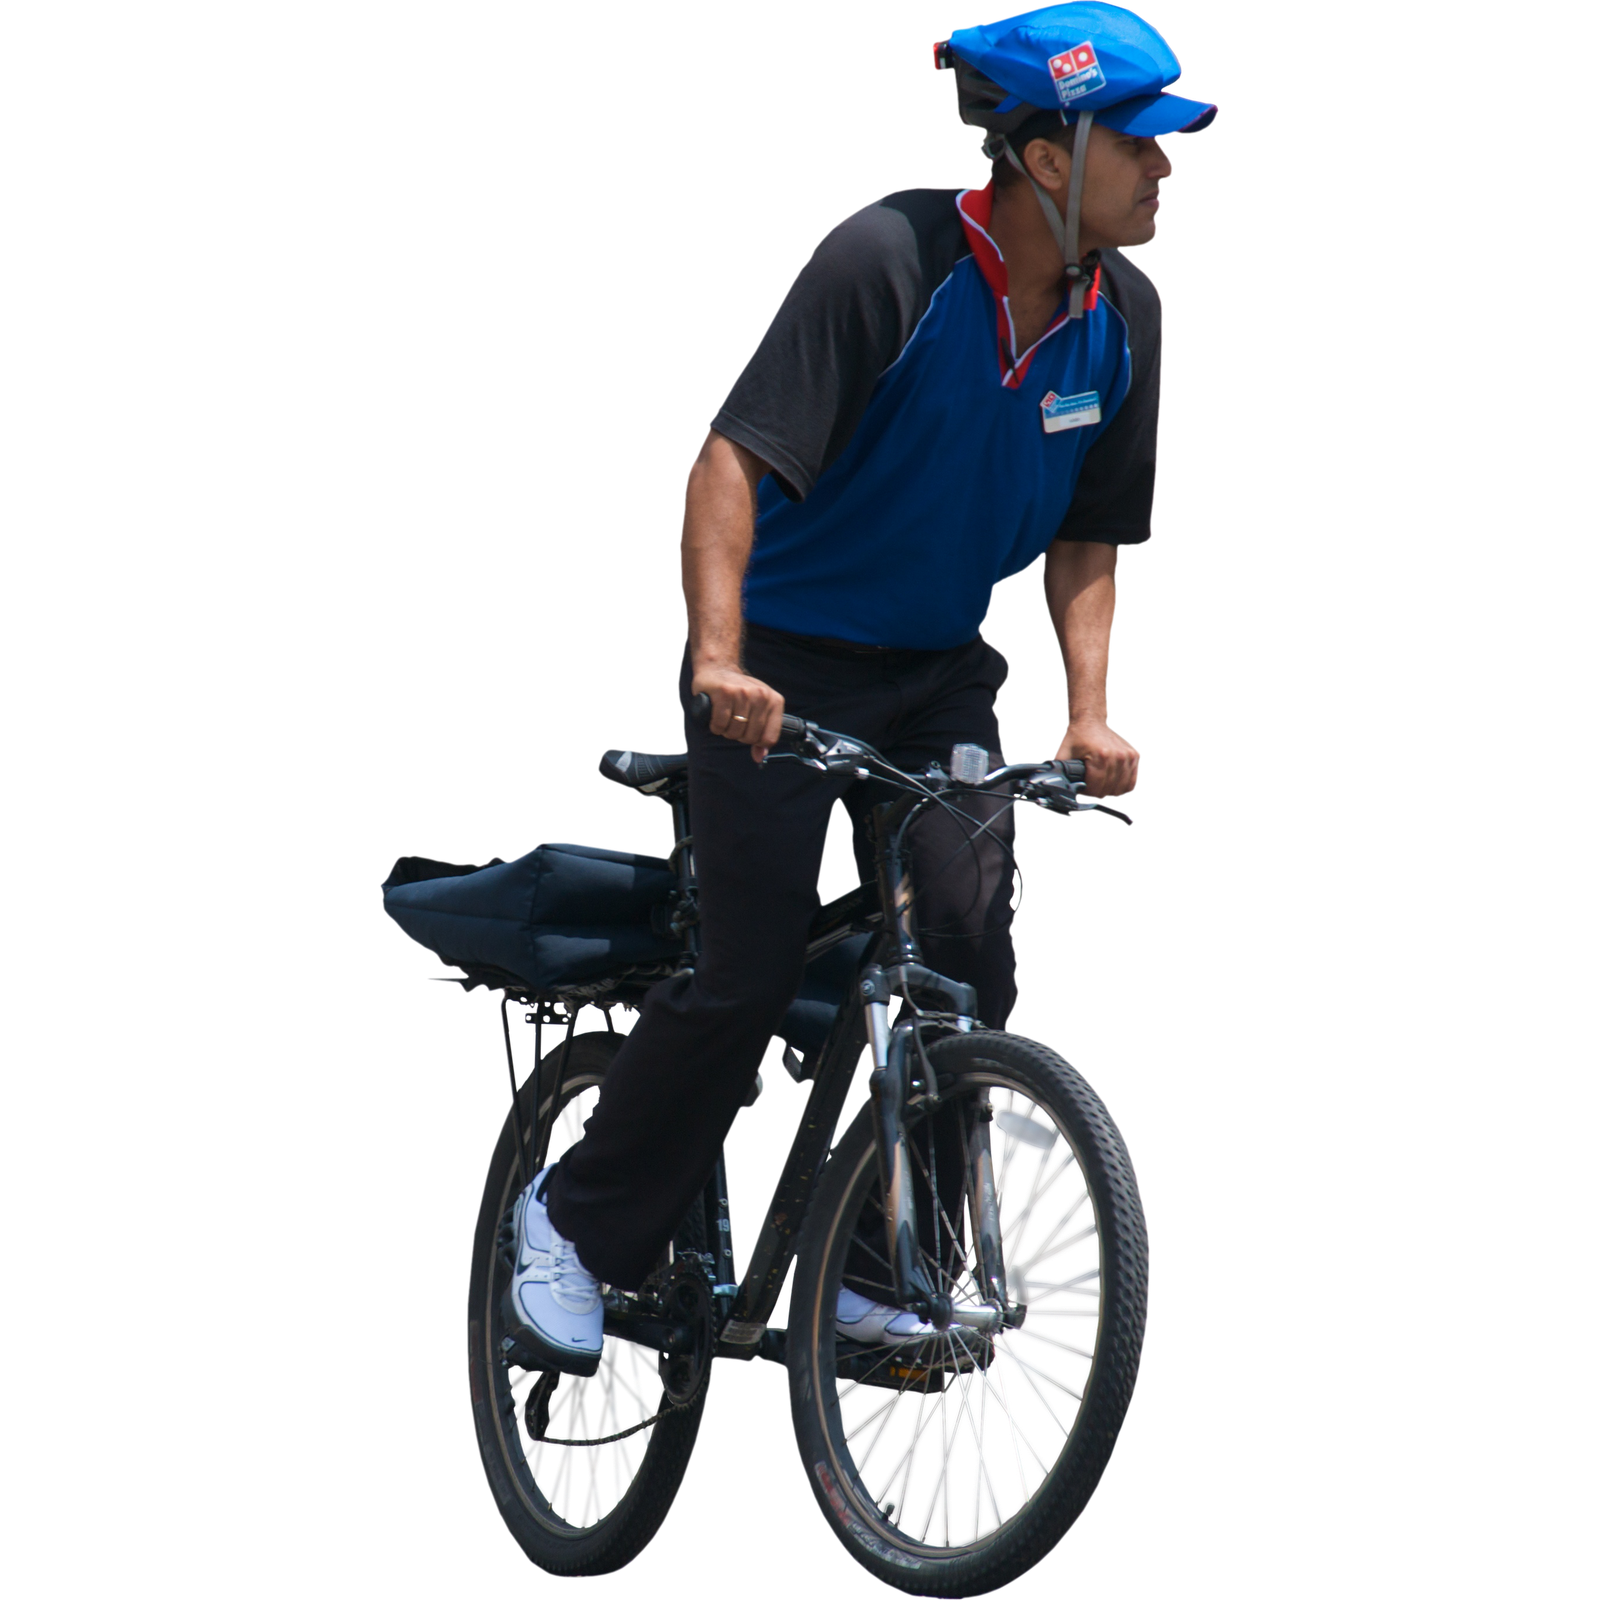 Imagen en bicicleta PNG imagen transparente